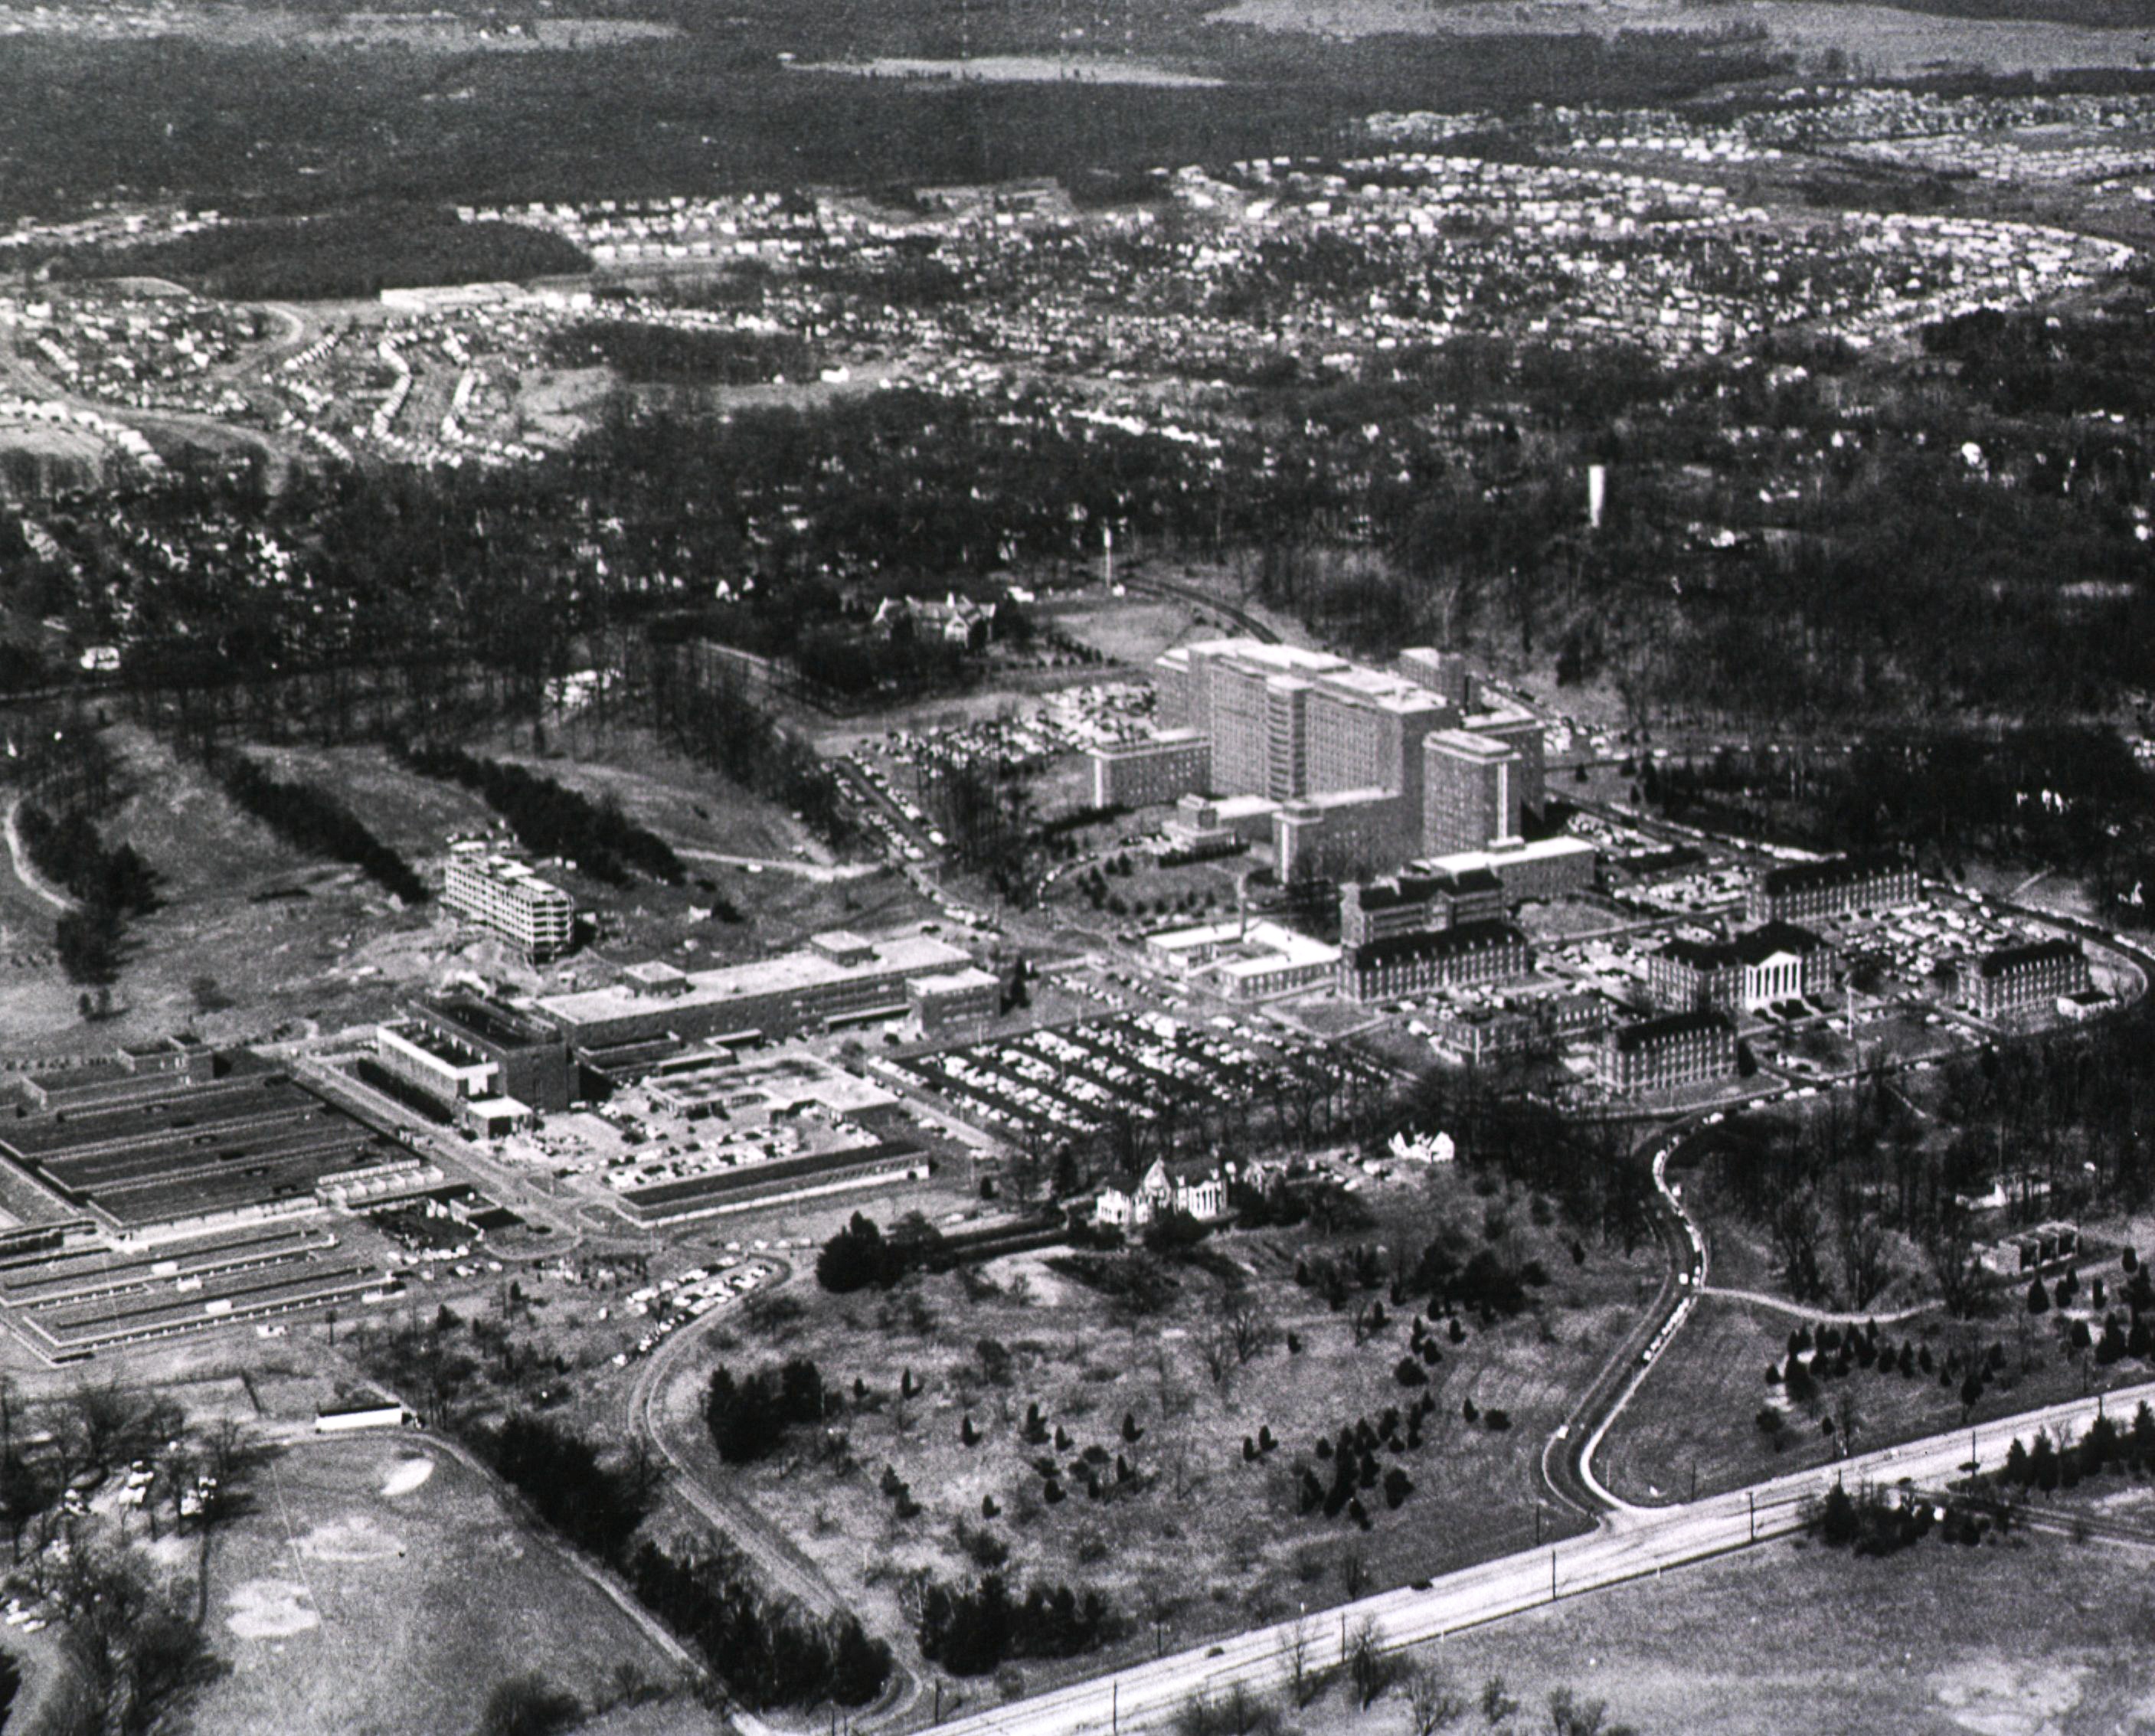 Aerial Image of the NIH campus taken around 1960